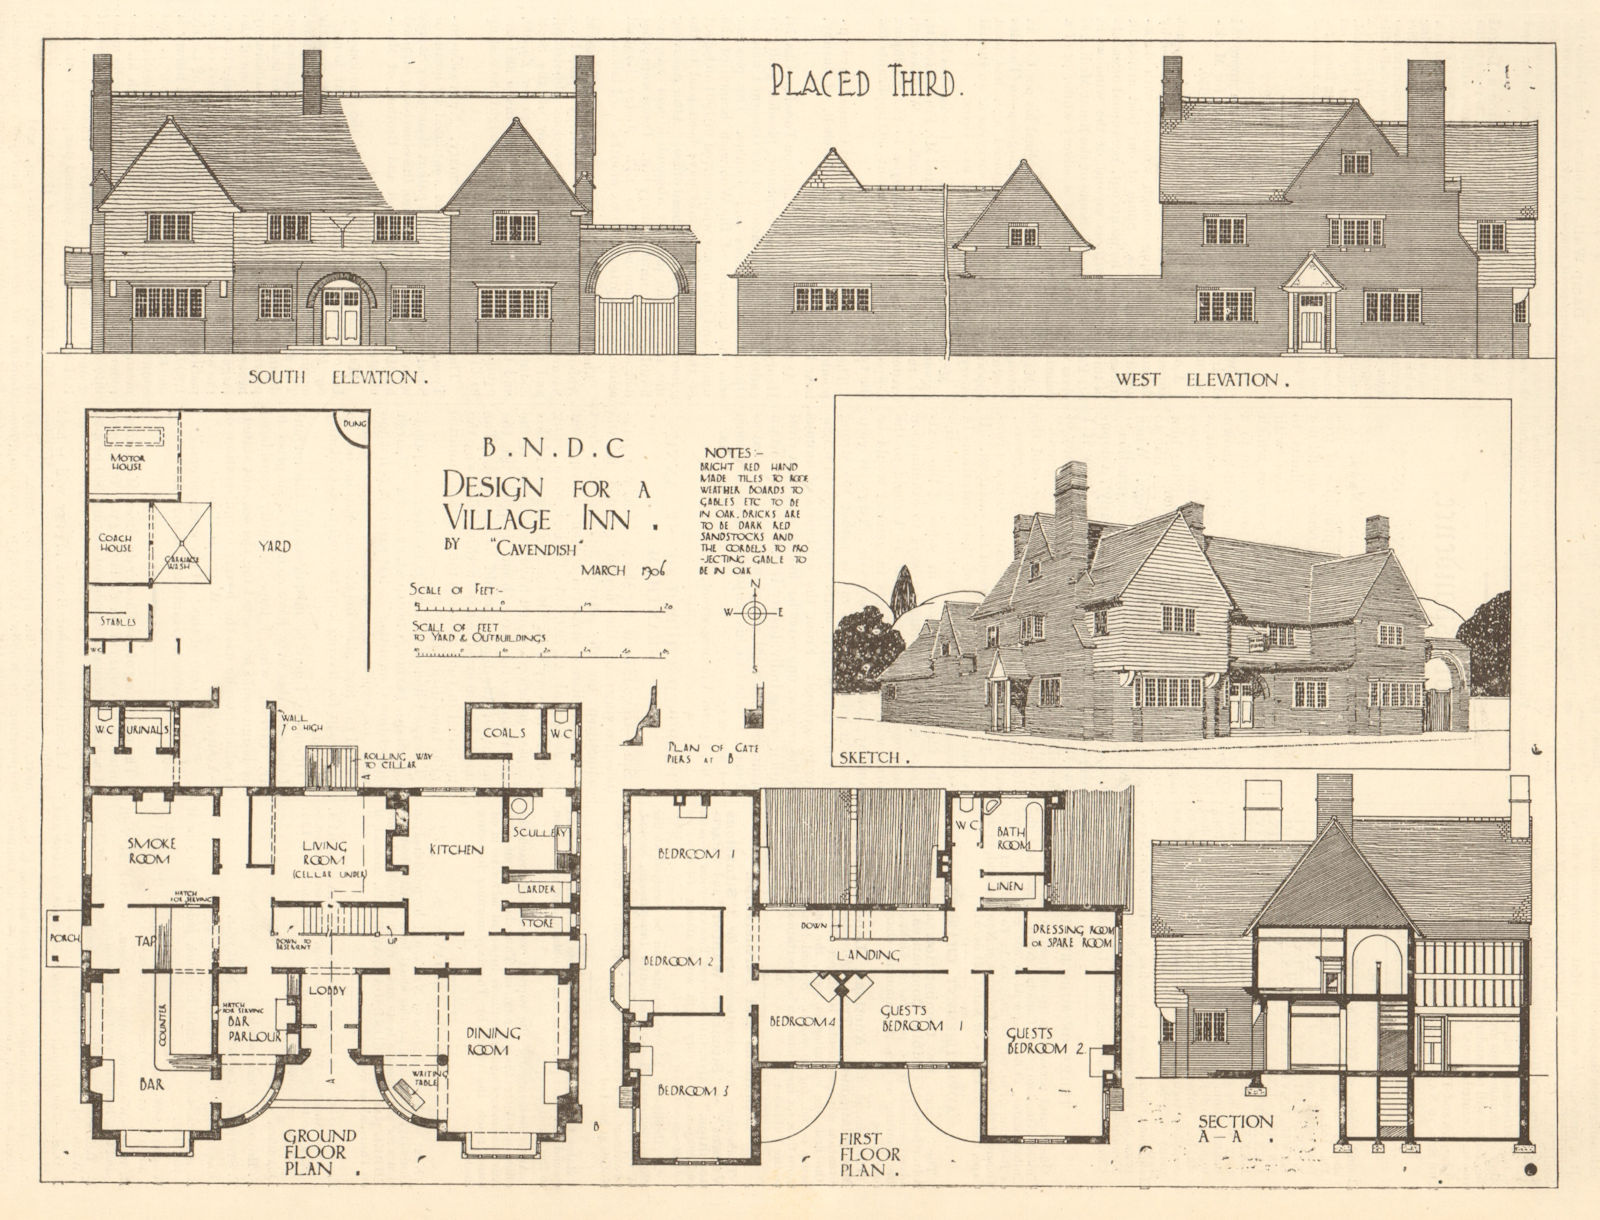 Design for a village inn by Cavendish. Sketch, elevations & plans 1906 print